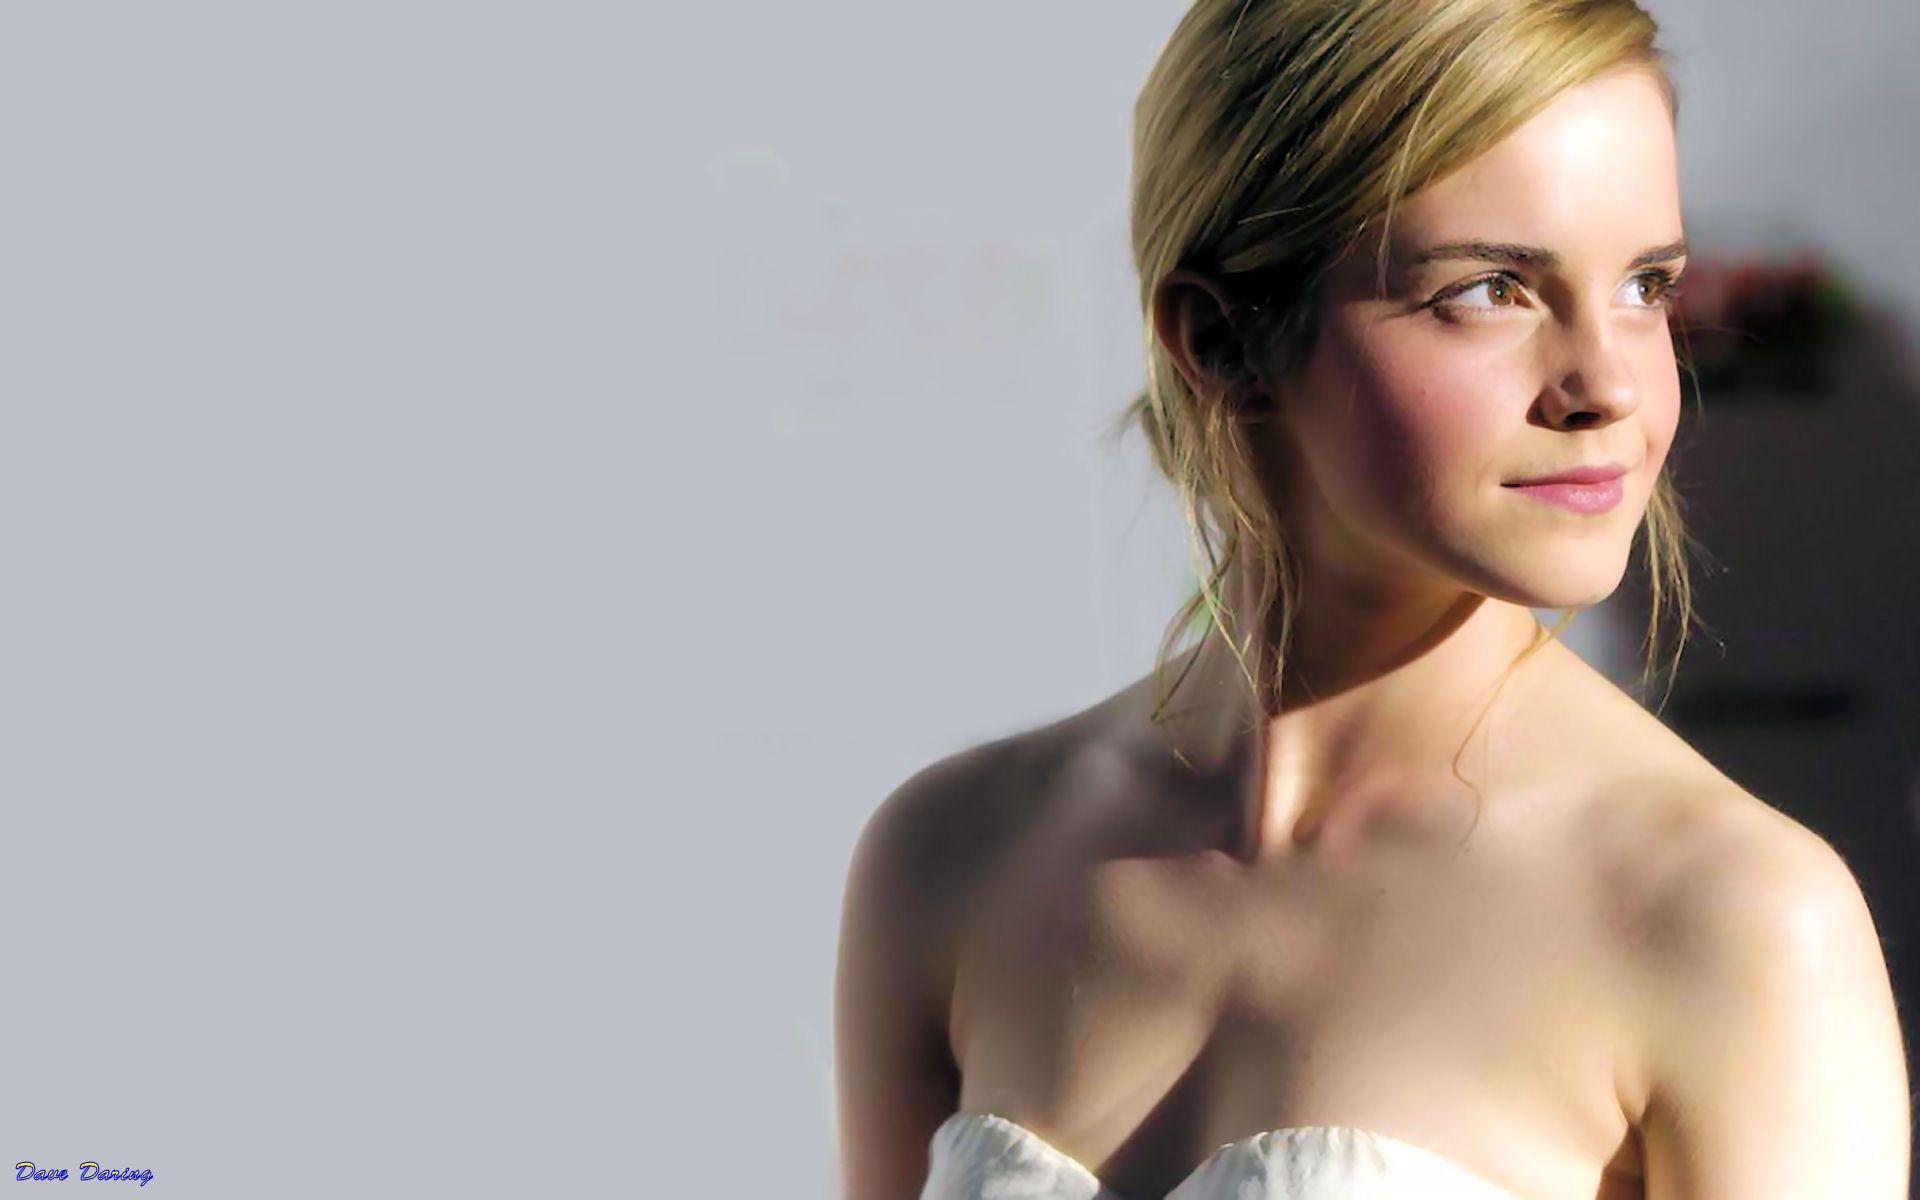 Emma Watson: Future Of Hollywood | A She